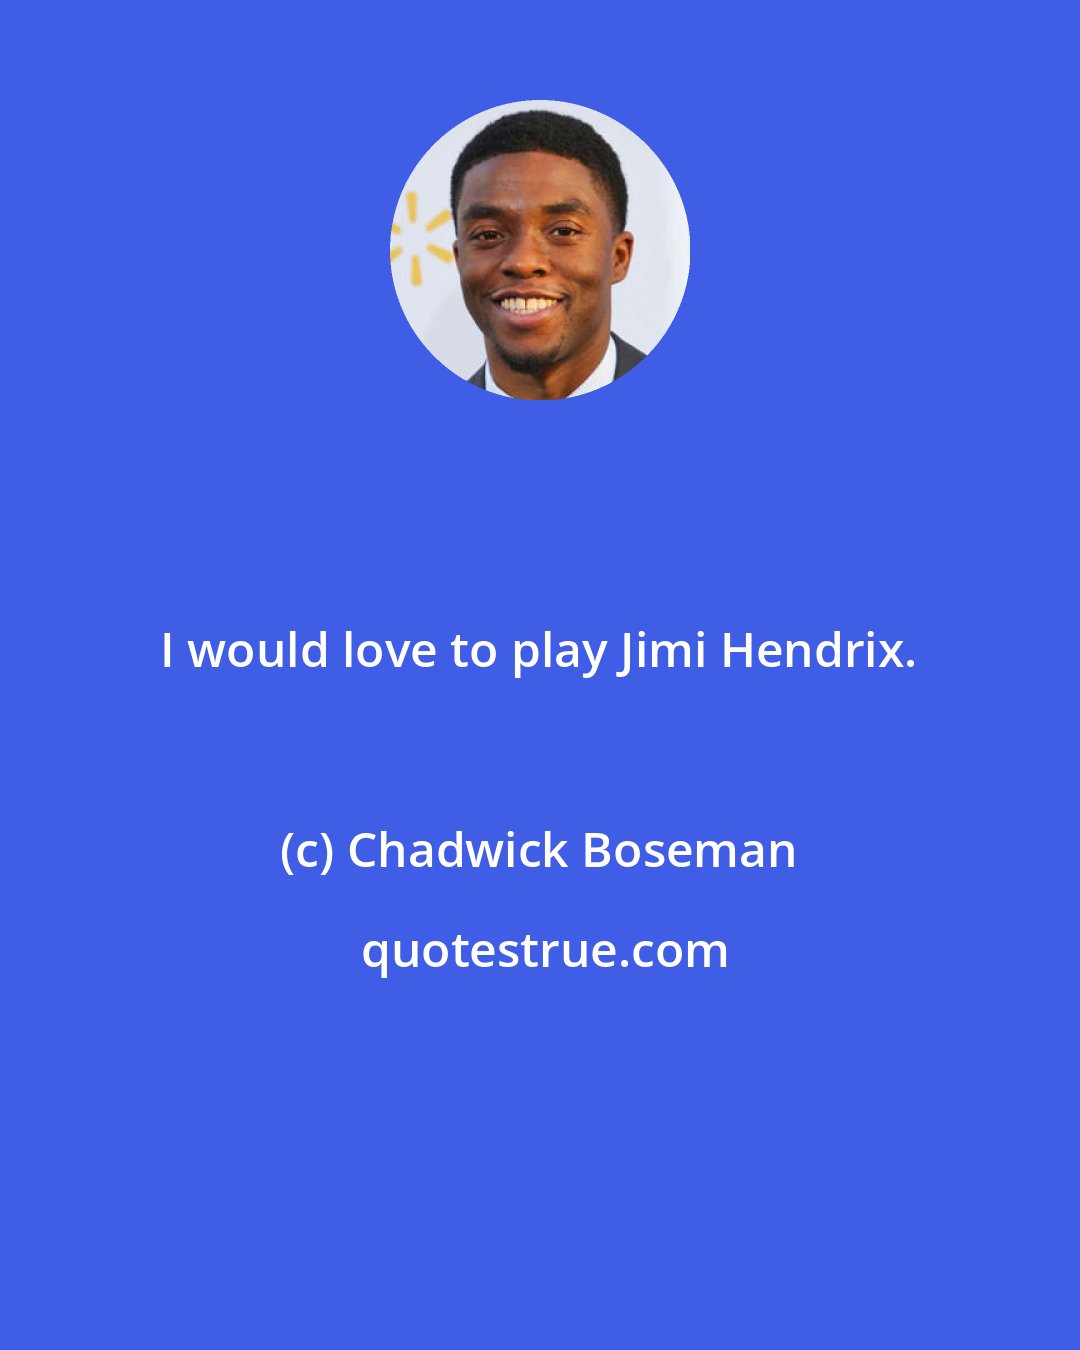 Chadwick Boseman: I would love to play Jimi Hendrix.